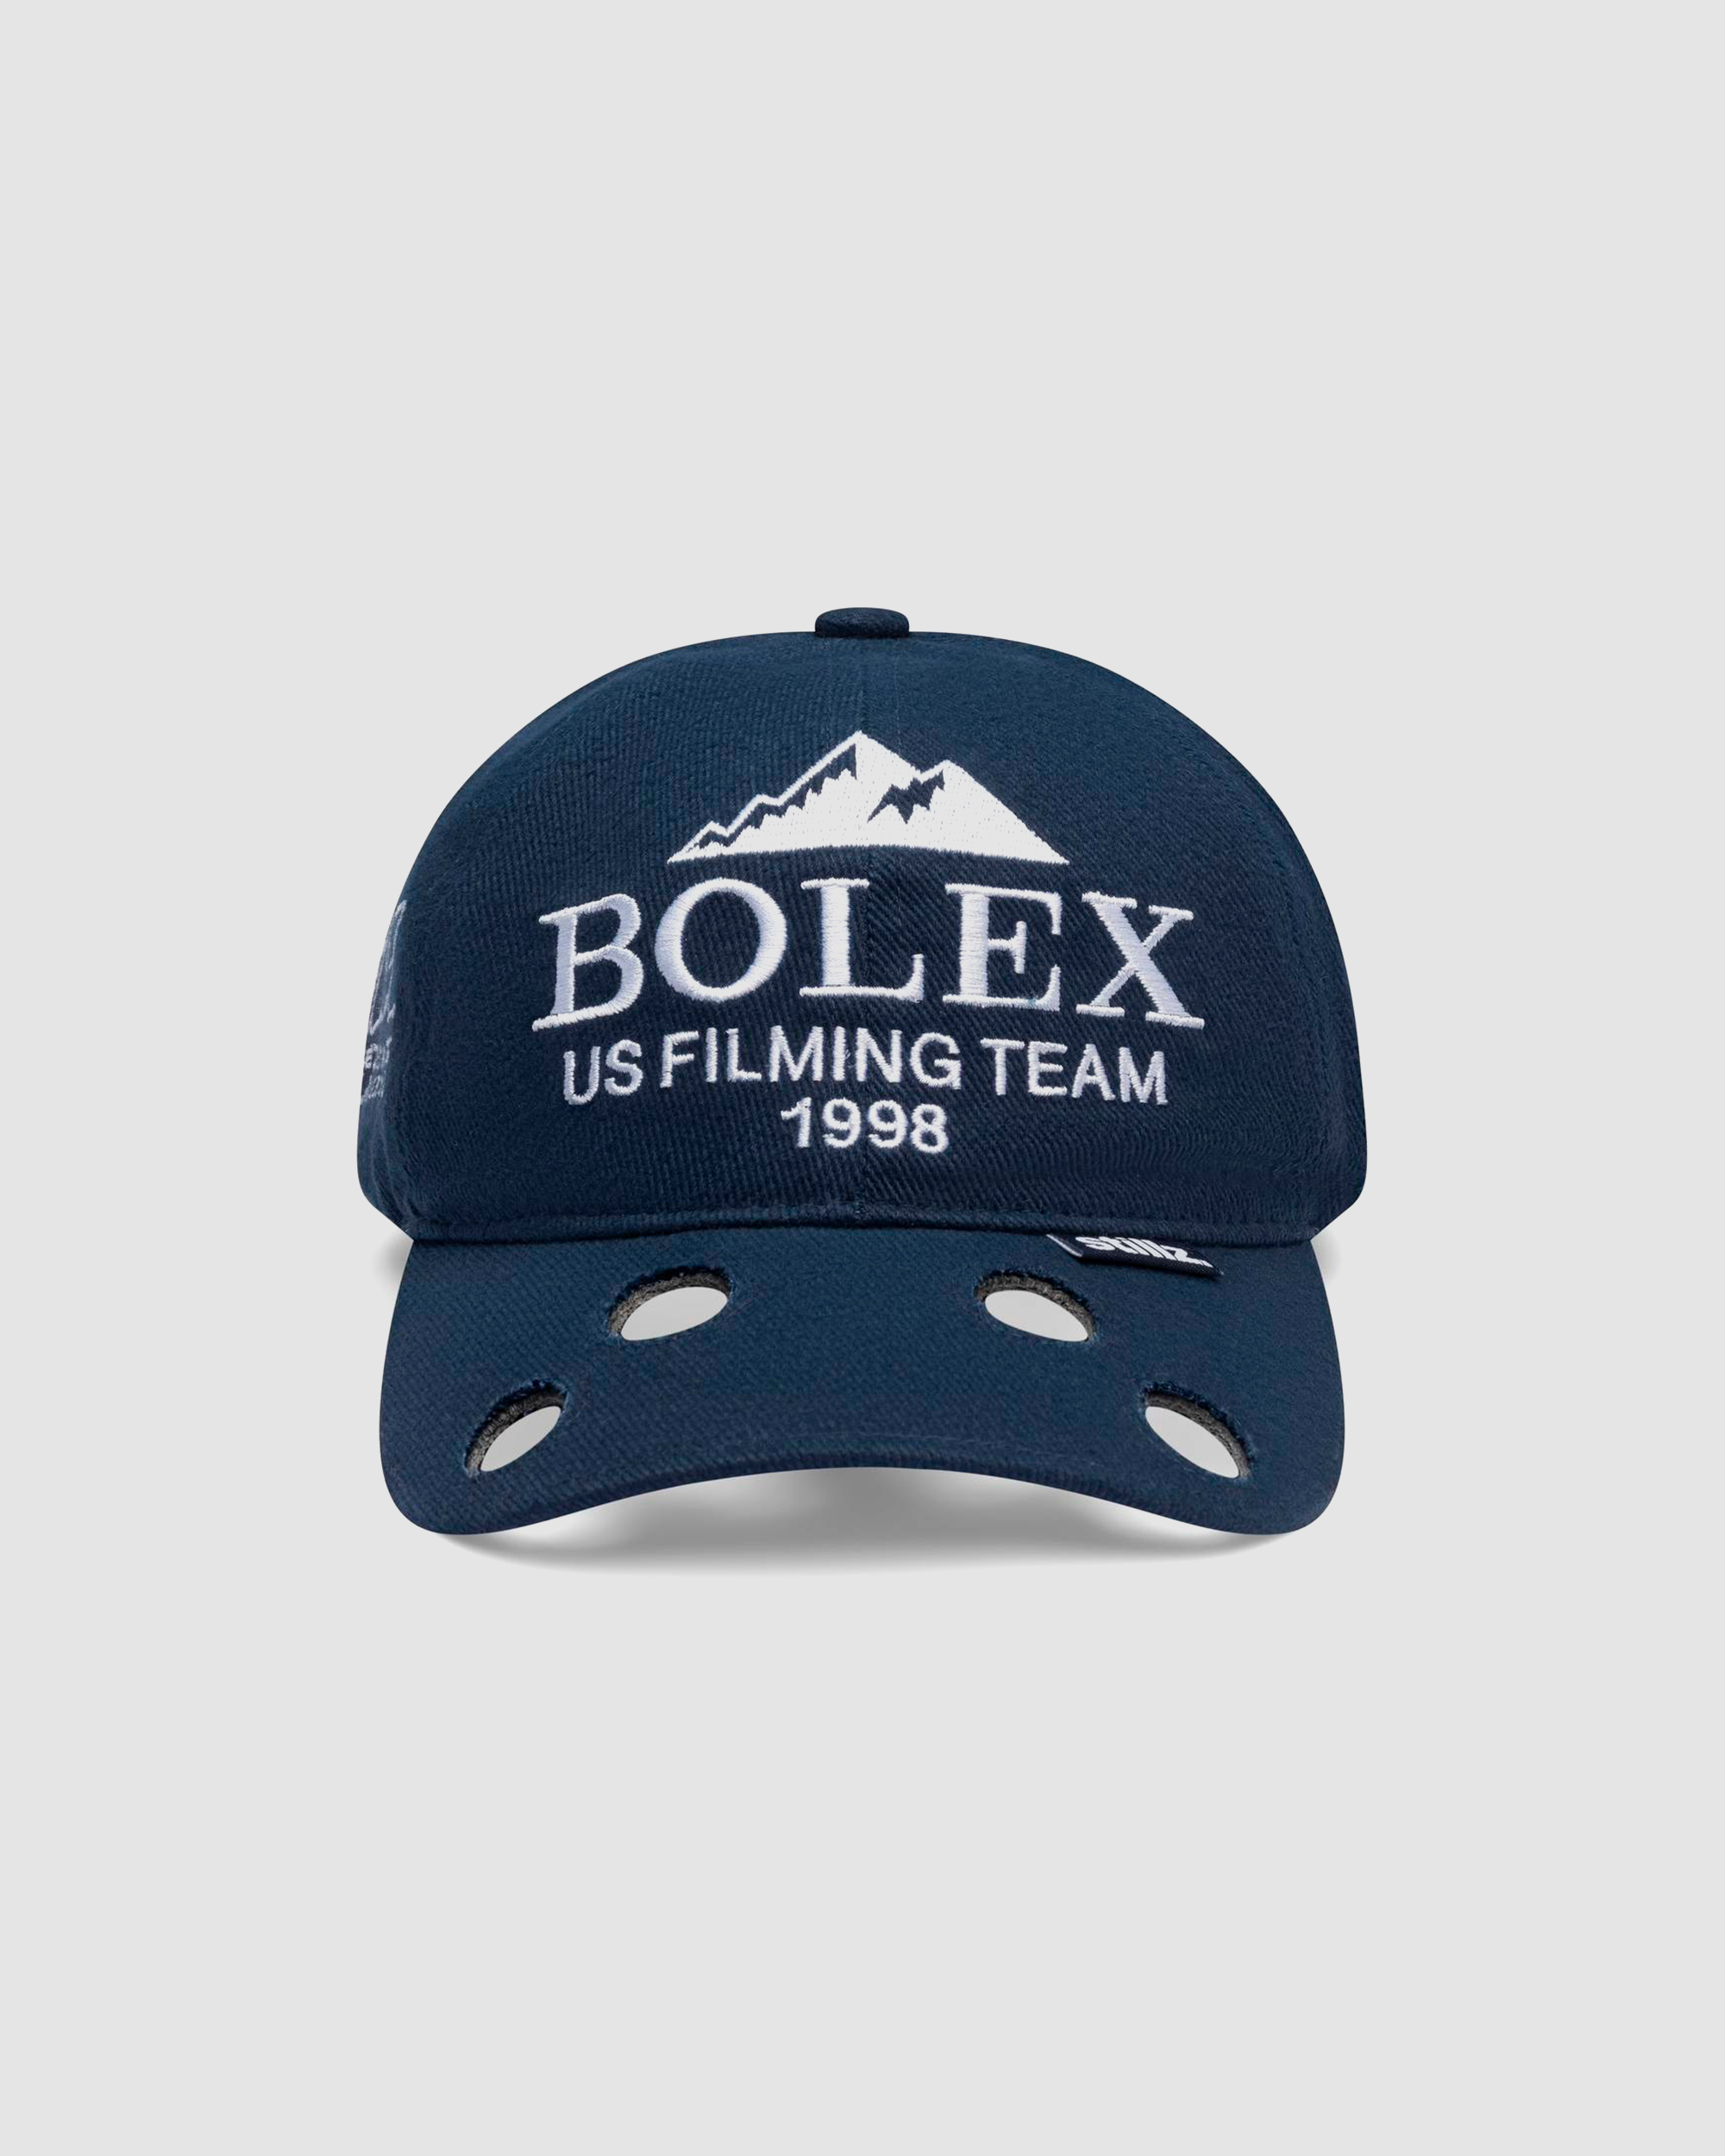 Bolex 6-panel hat, navy